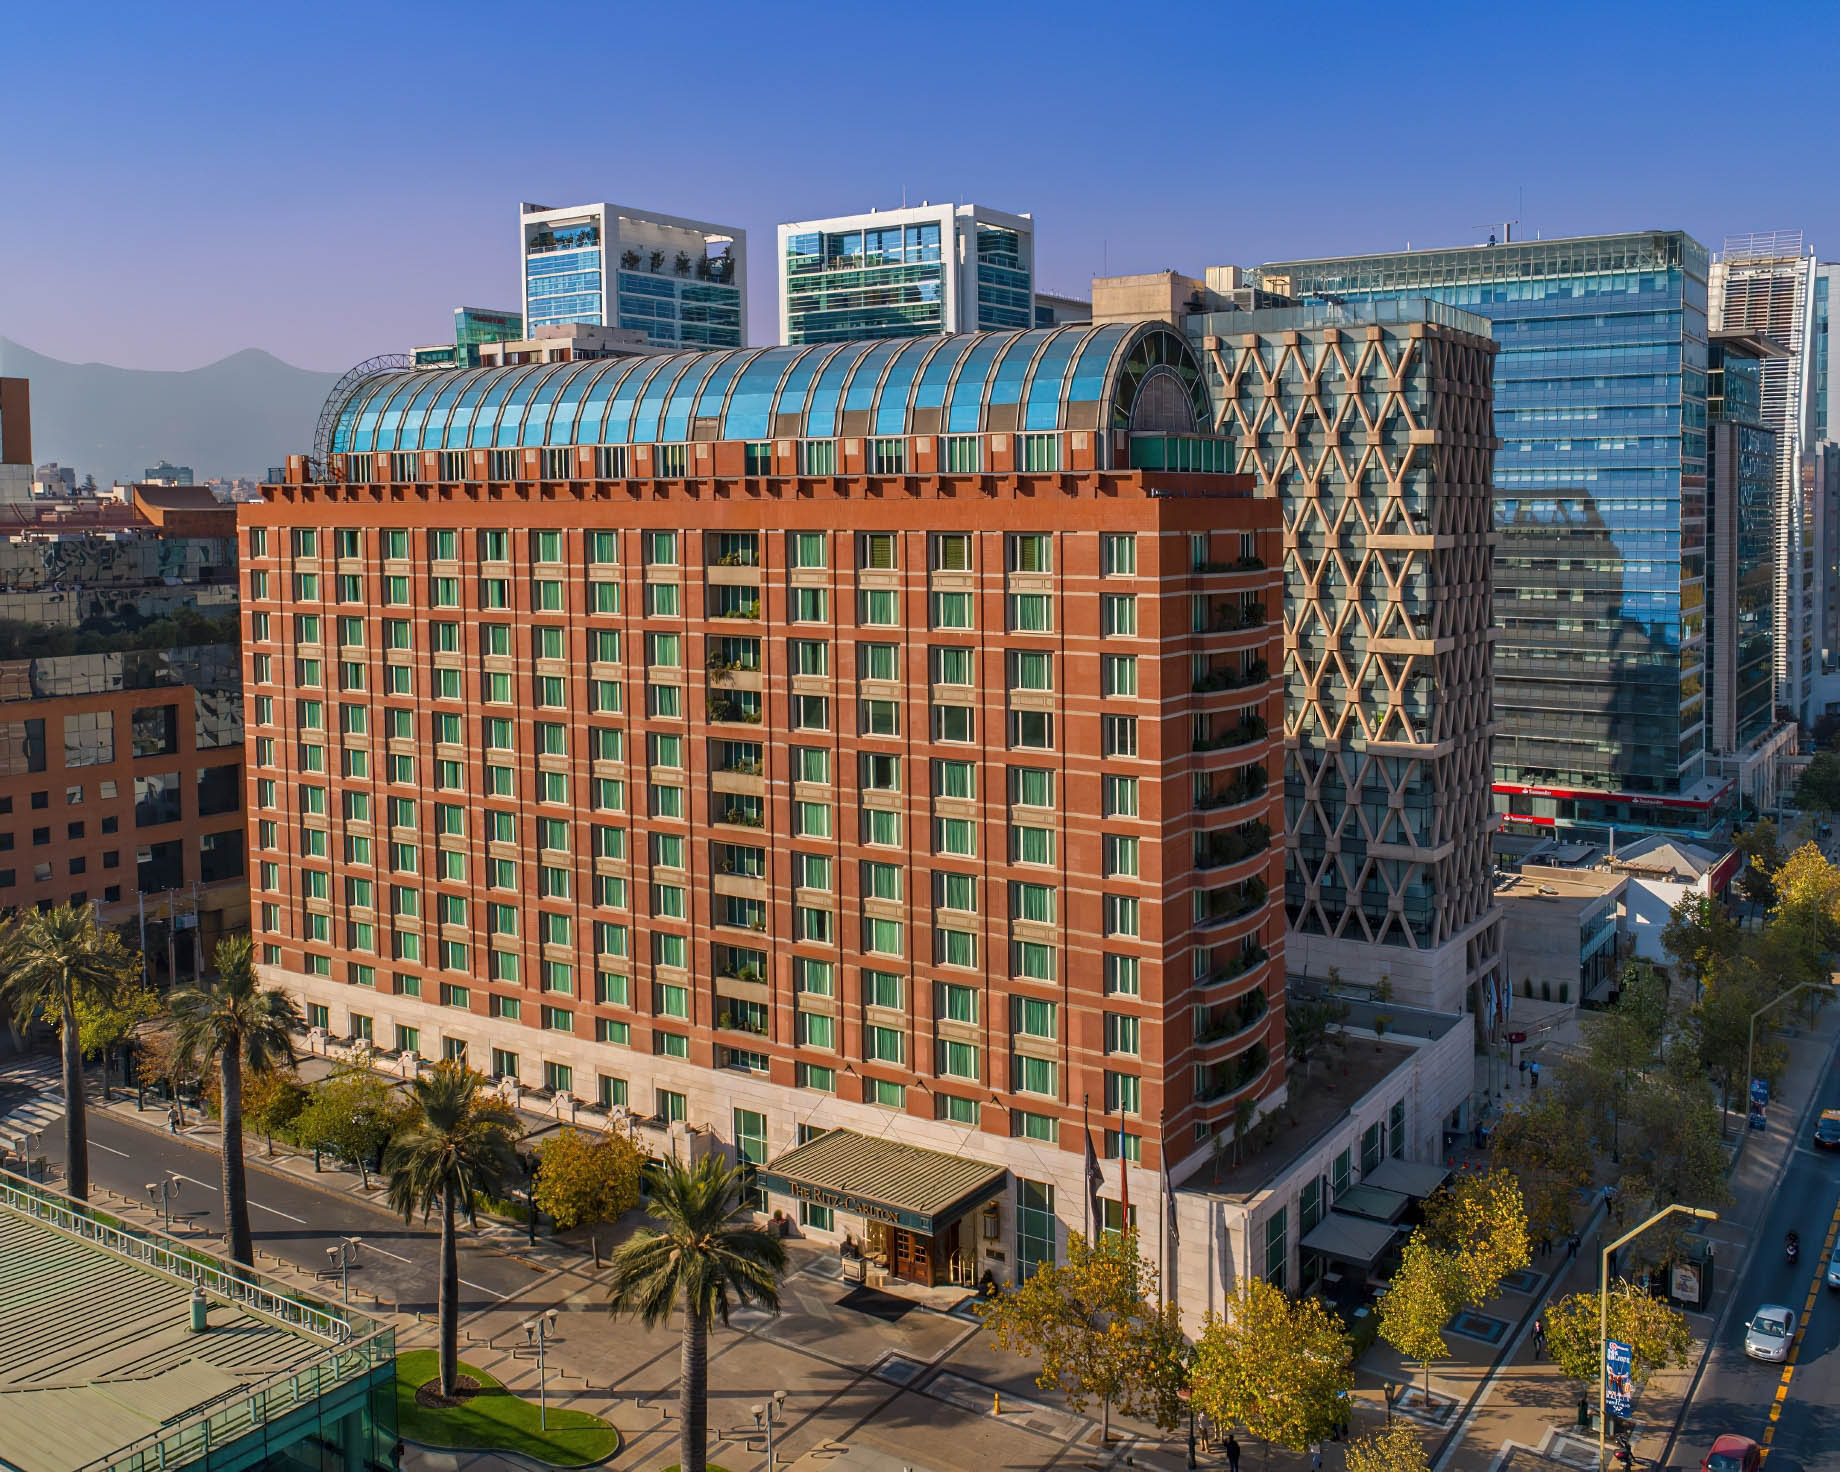 The Ritz-Carlton, Santiago Hotel - Santiago, Chile - Exterior Aerial View